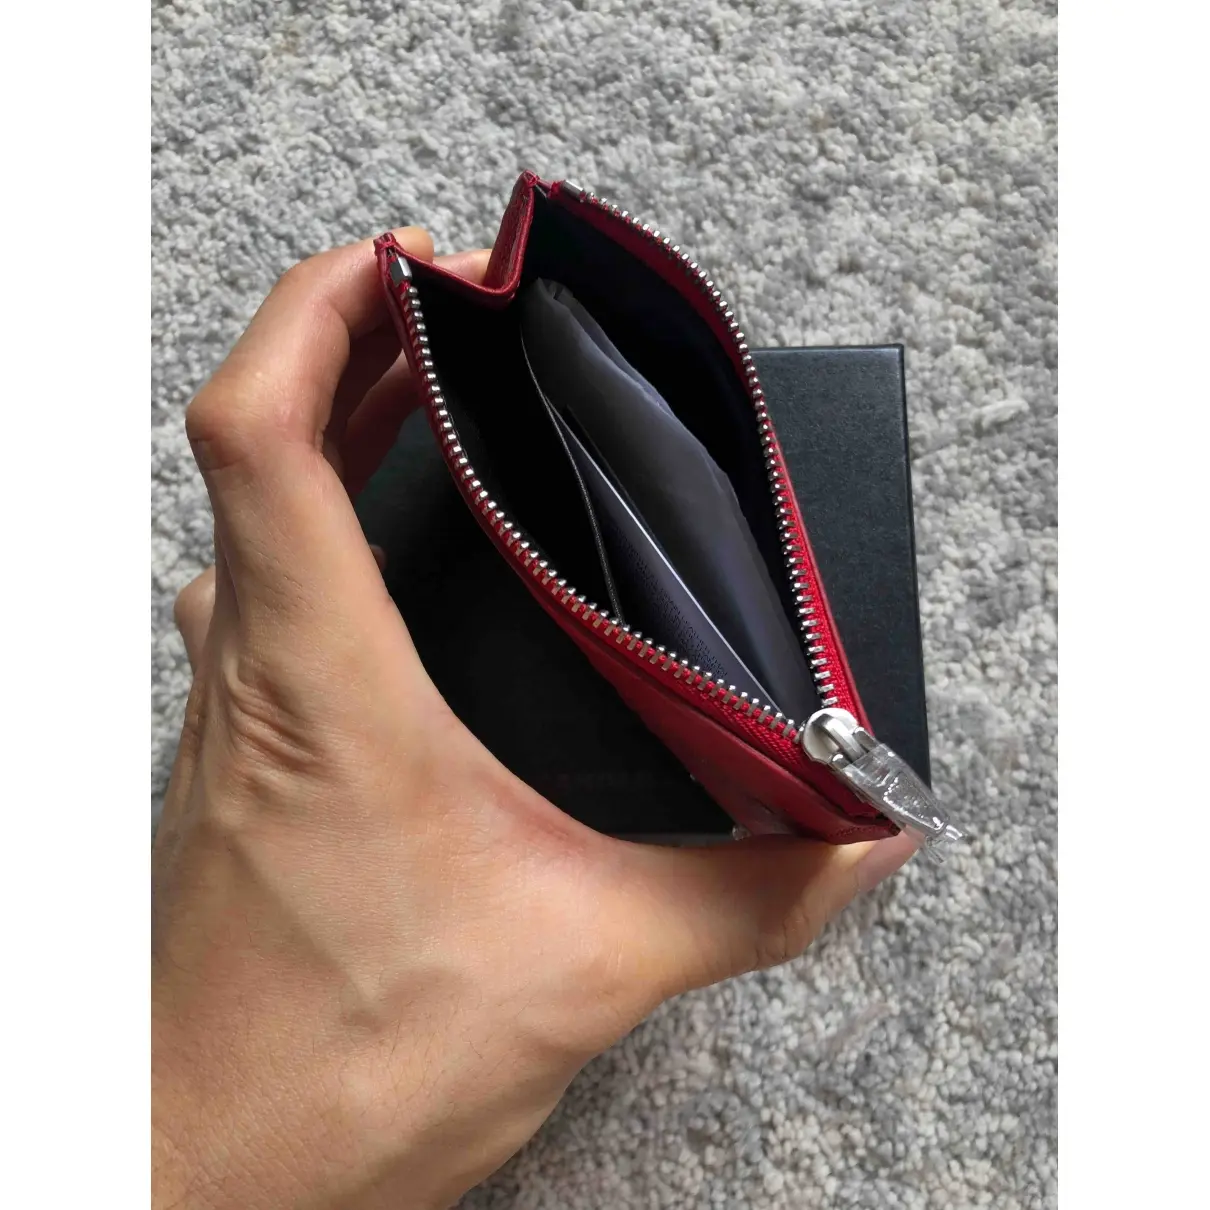 Buy Alexander Wang Leather wallet online